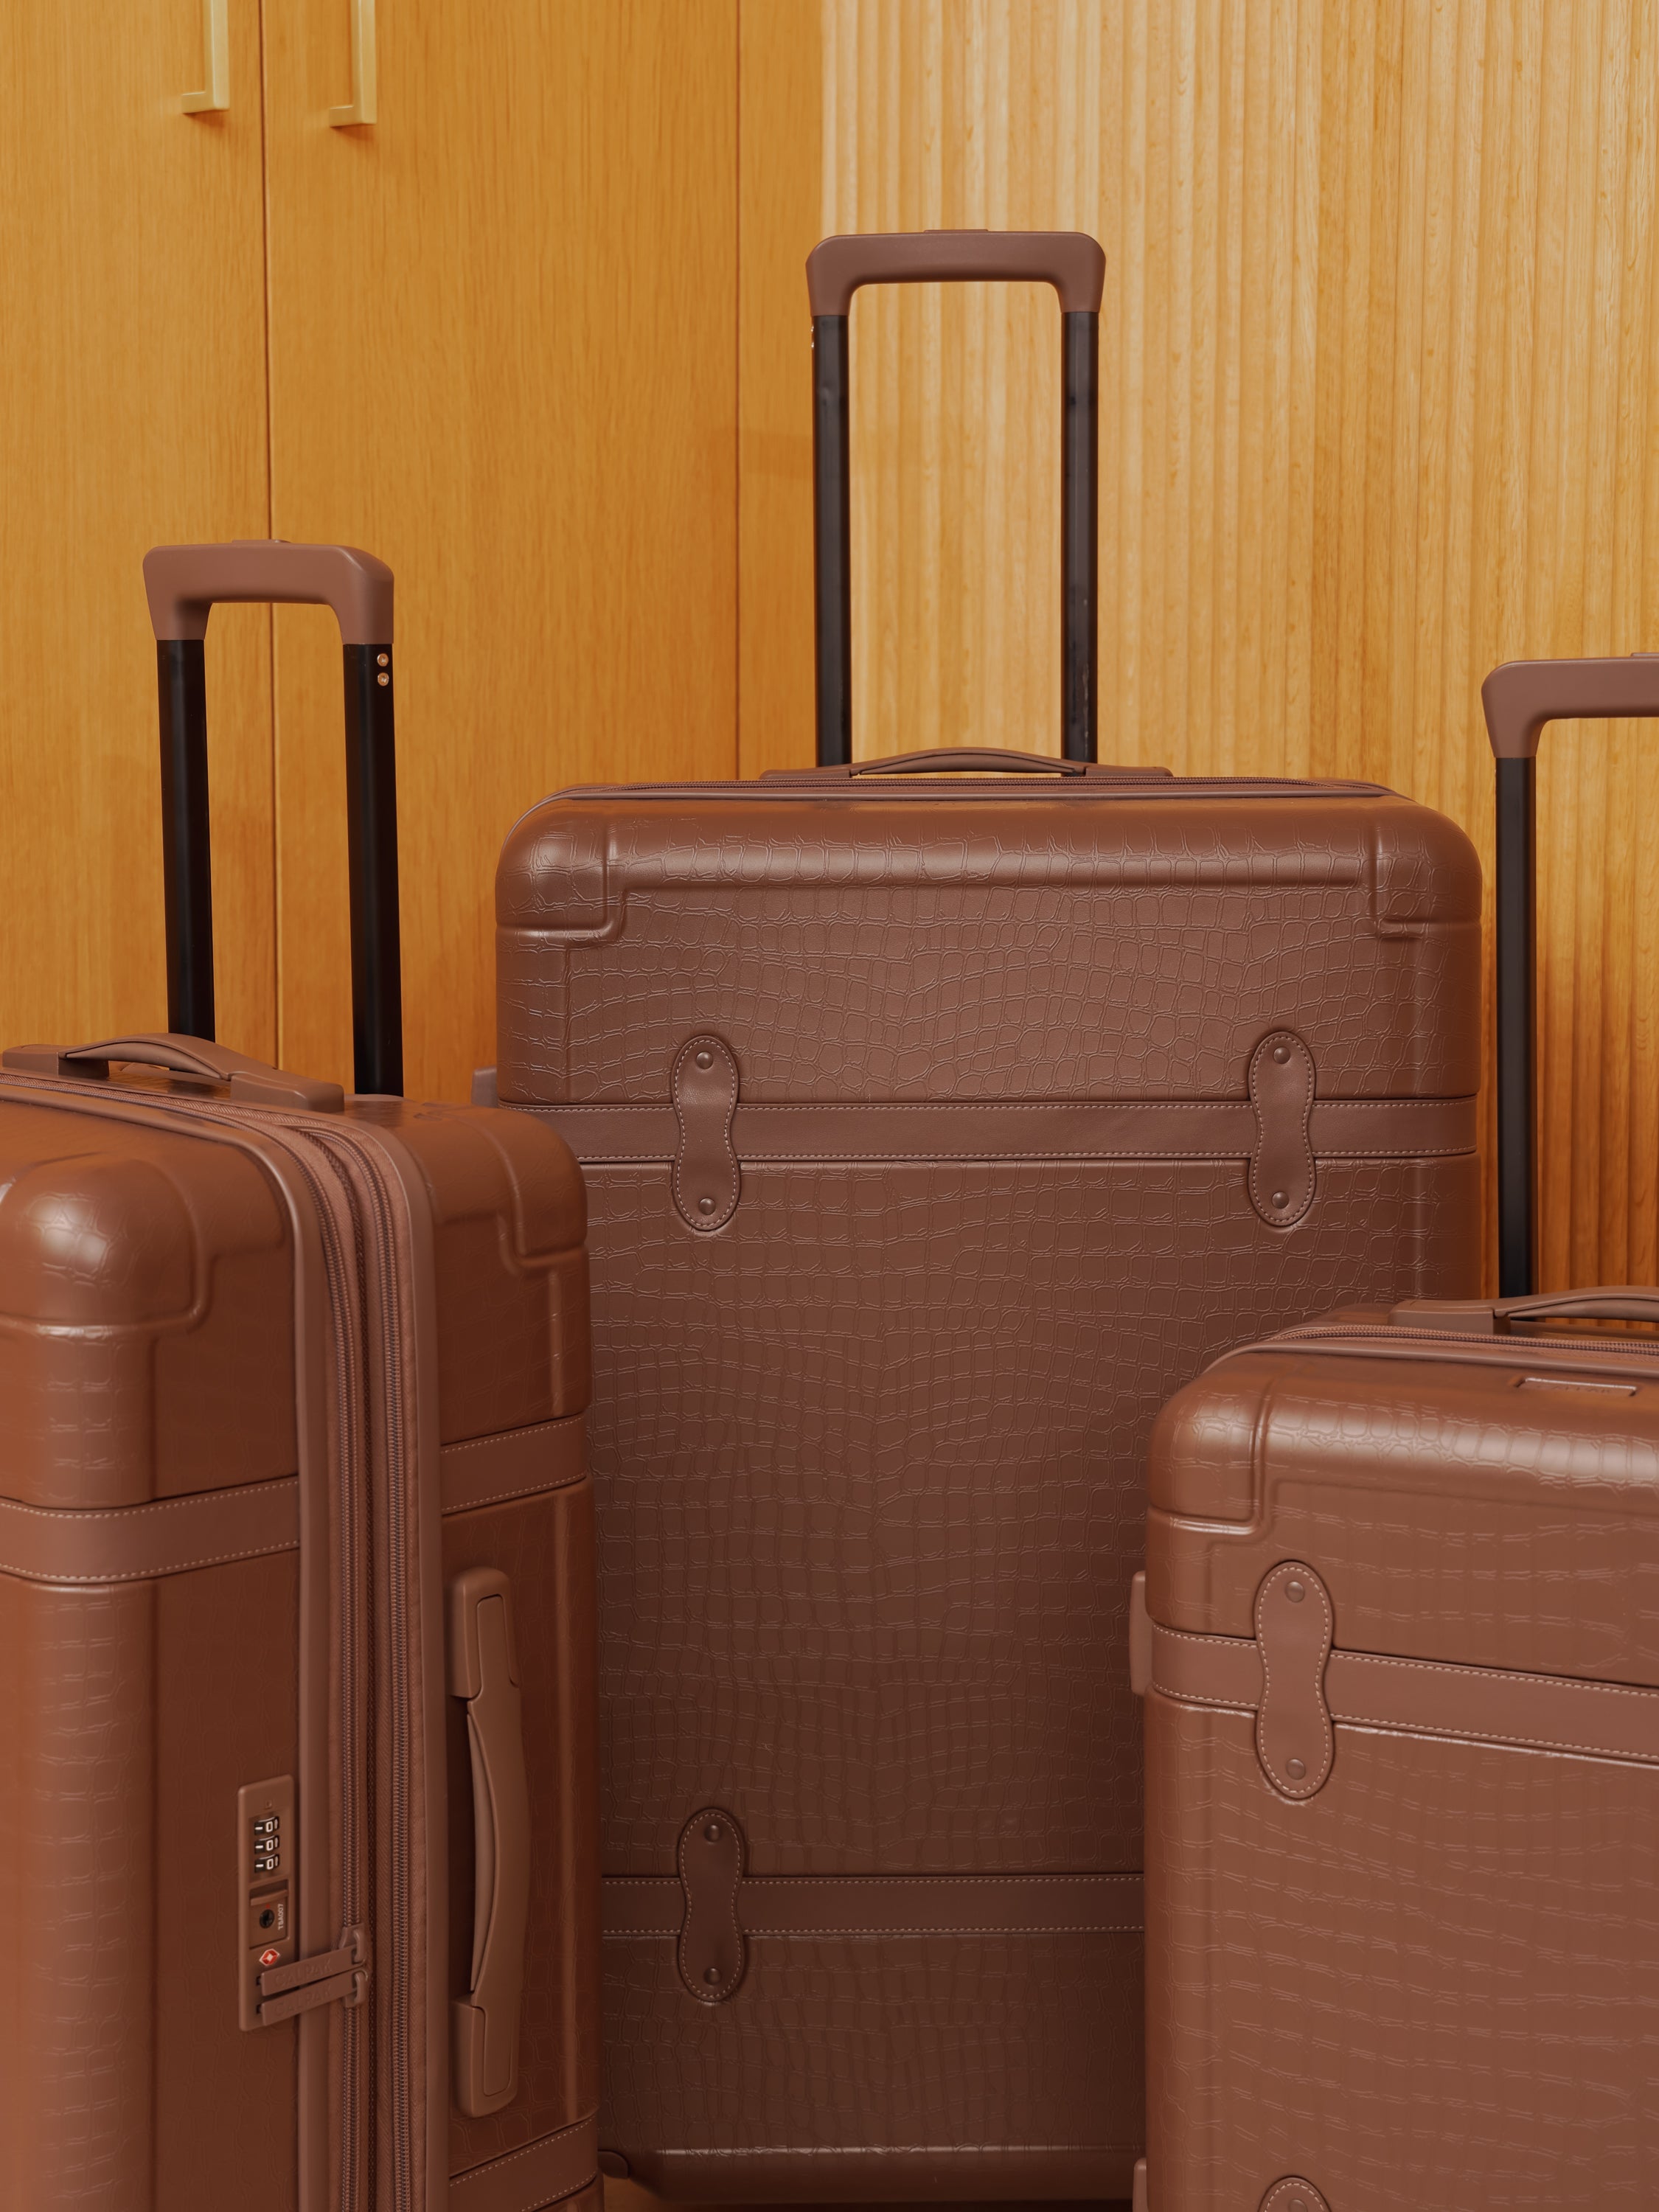 CALPAK TRNK hard shell luggage set with tsa lock, grab handles in brown